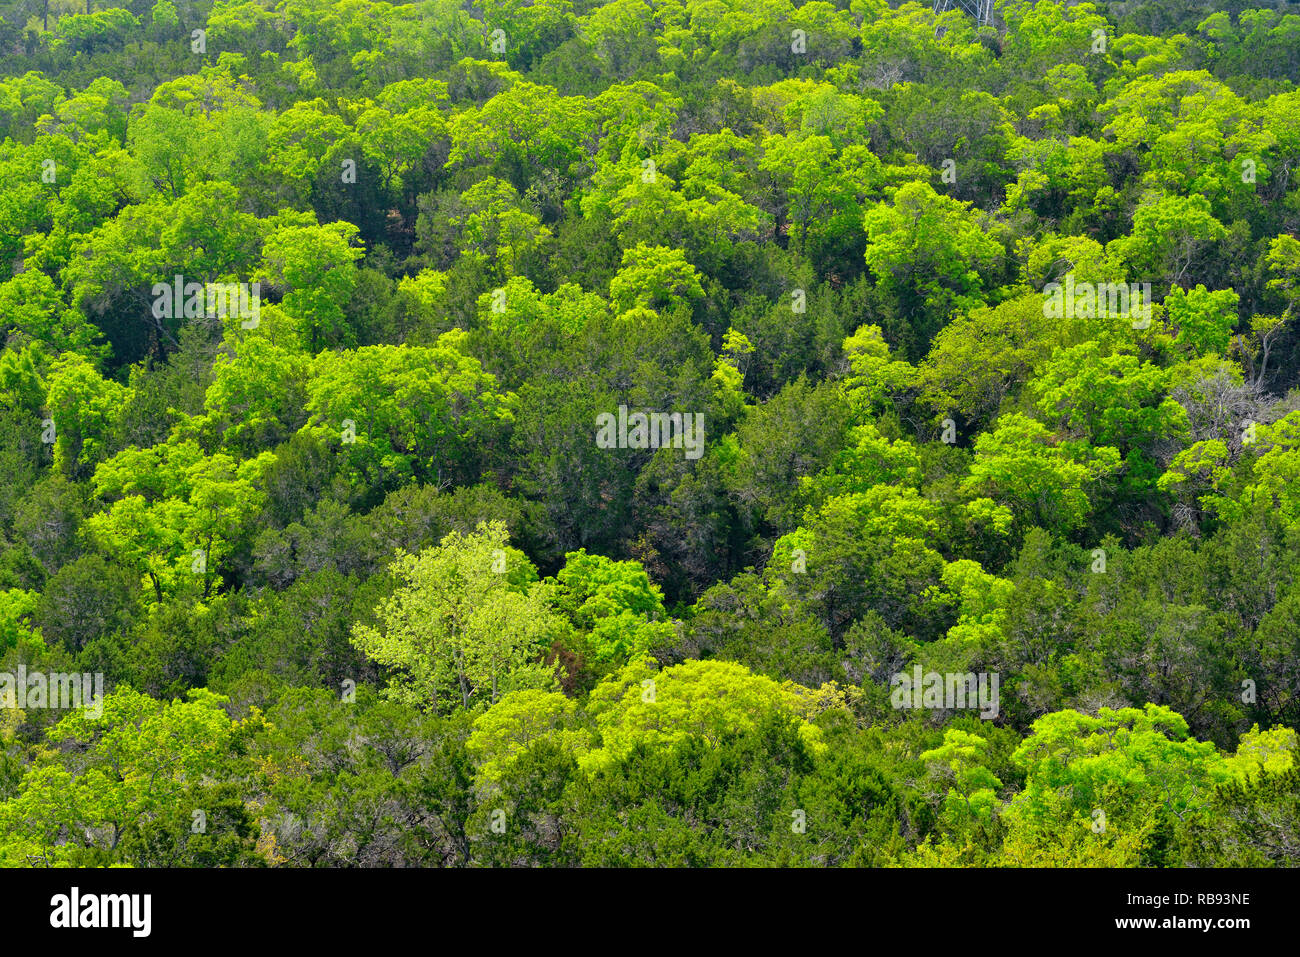 Frühling Laub auf einem Hügel von Hartholz Bäume, Lakeway, Travis County, Texas, USA Stockfoto